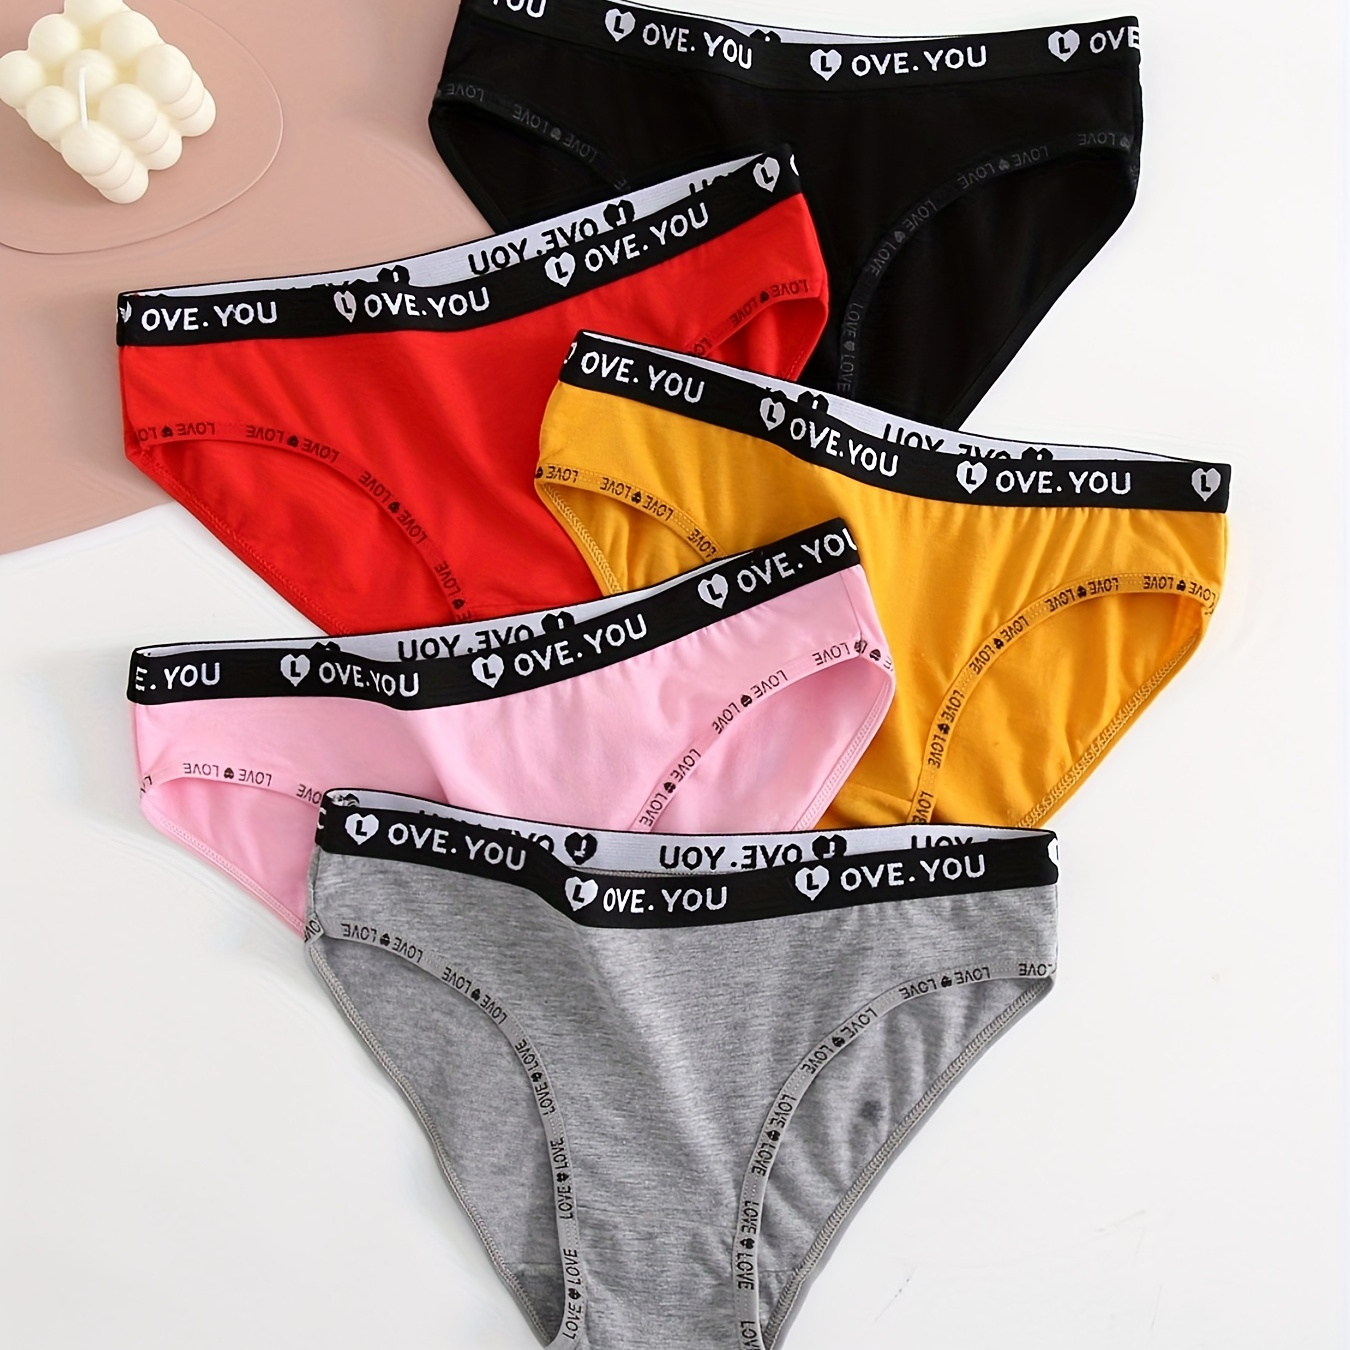 

5pcs Letter Tape Briefs, Breathable & Comfy Stretchy Intimates Panties, Women's Lingerie & Underwear